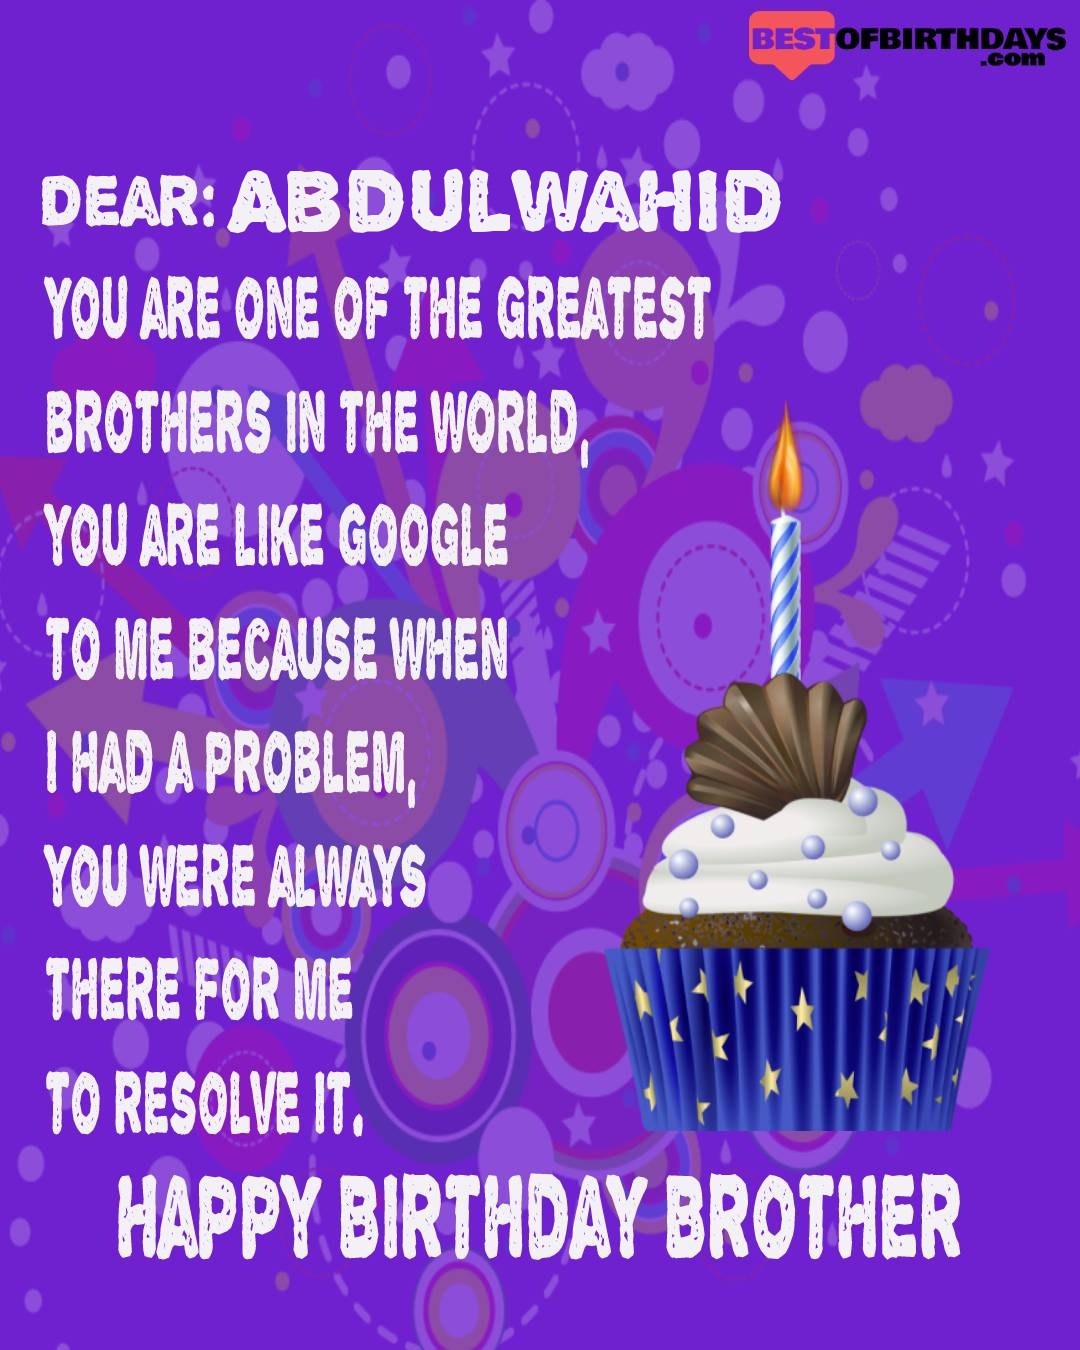 Happy birthday abdulwahid bhai brother bro